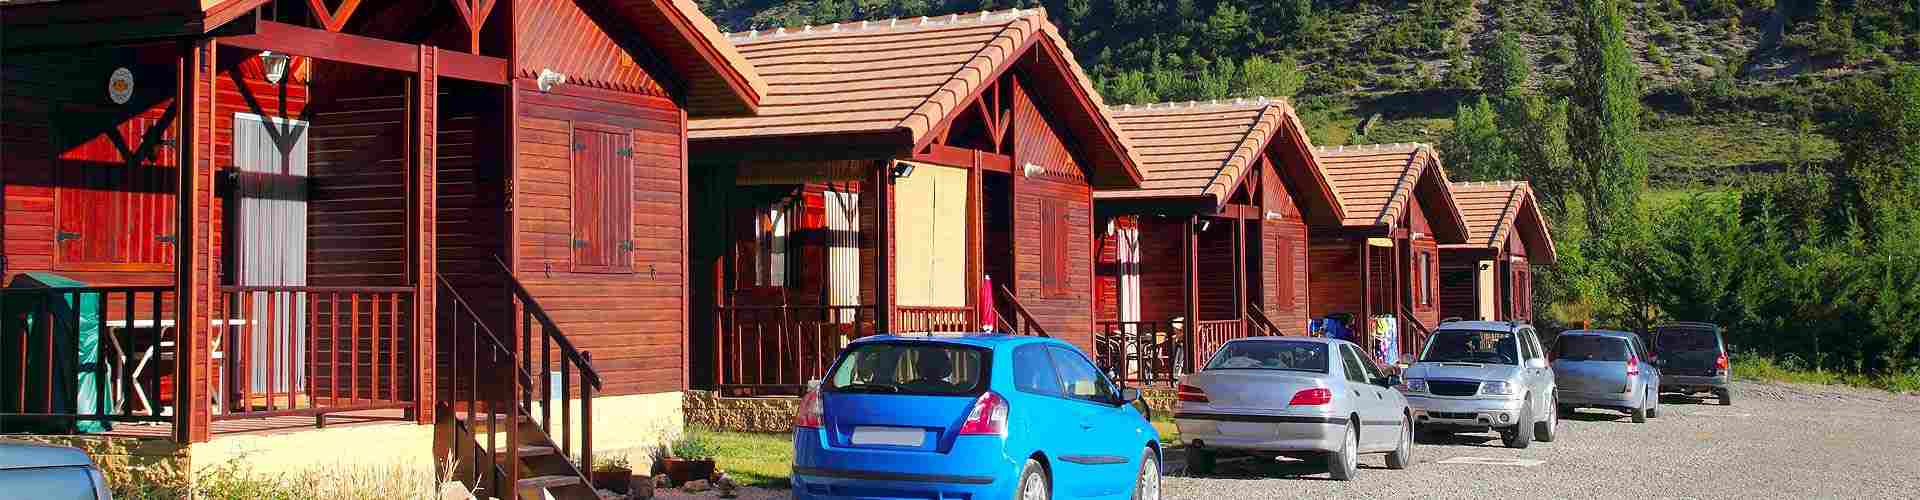 Campings y bungalows en Parral de Villovela